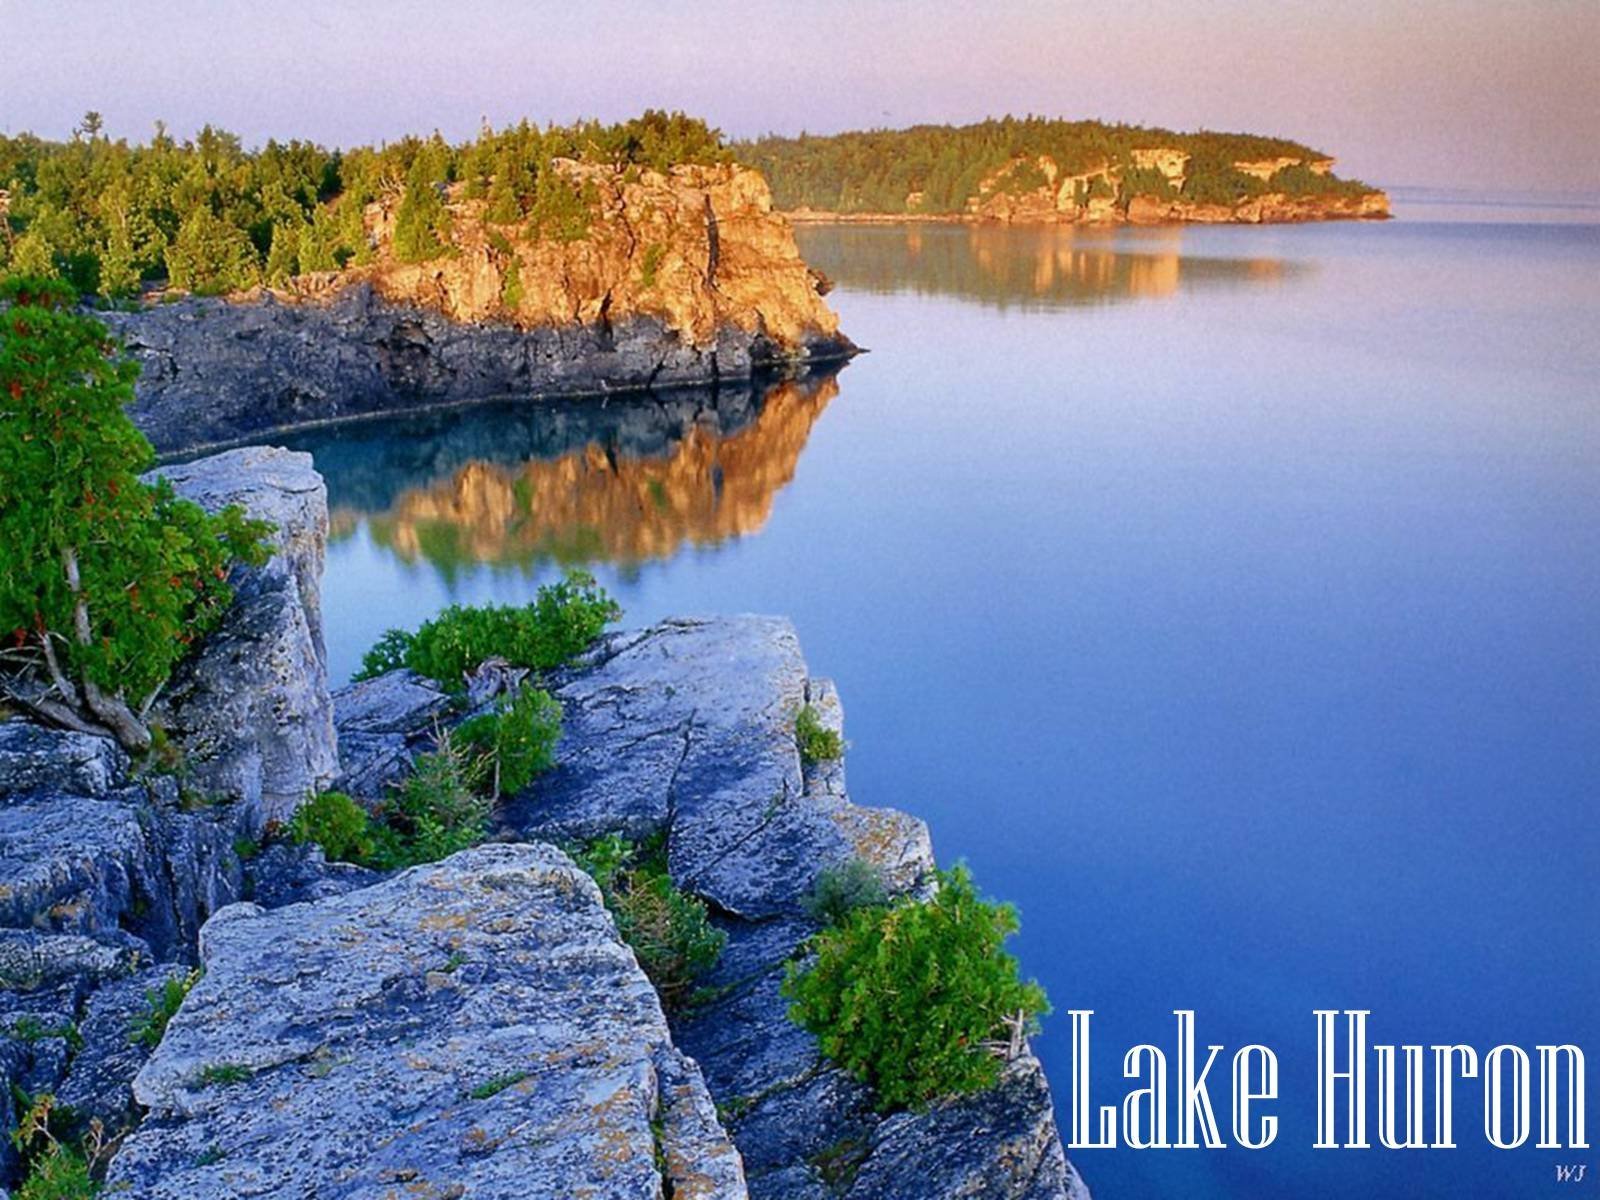 Lake baikal russia. Озеро Гурон Северная Америка. Озеро Гурон Канада. Озеро Гурон в Онтарио. Озеро Гурон Мичиган.